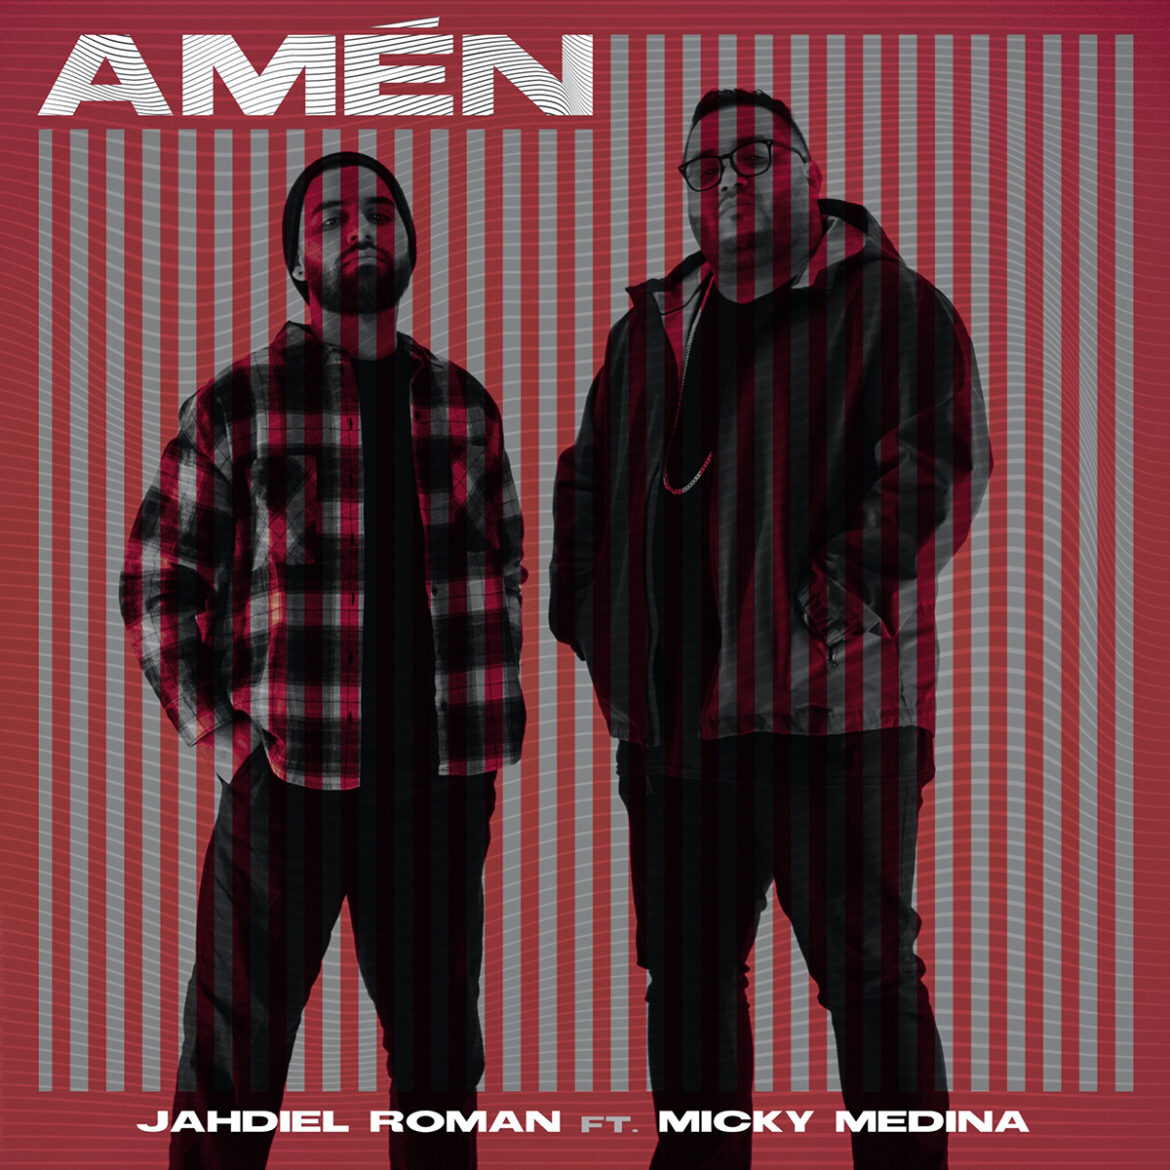 Jahdiel Román lanza su segundo tema musical del 2021 titulado “Amén” junto al cantante urbano Micky Medina